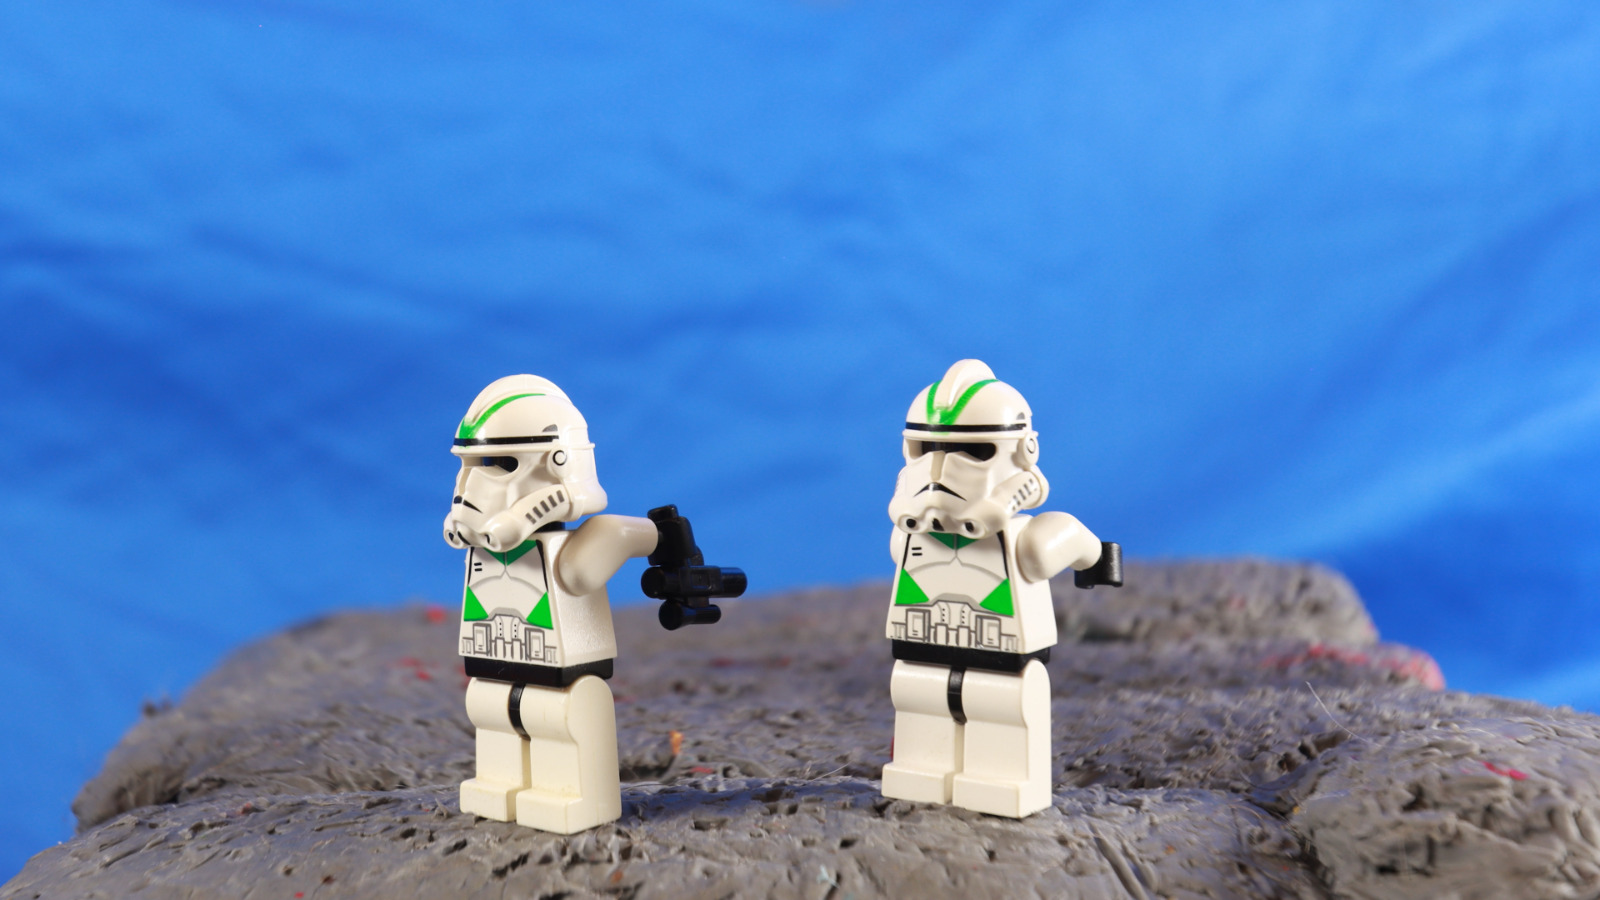 LEGO Star Wars - 2x Clone Trooper, 442nd green (Phase 2) Minifigure magnets